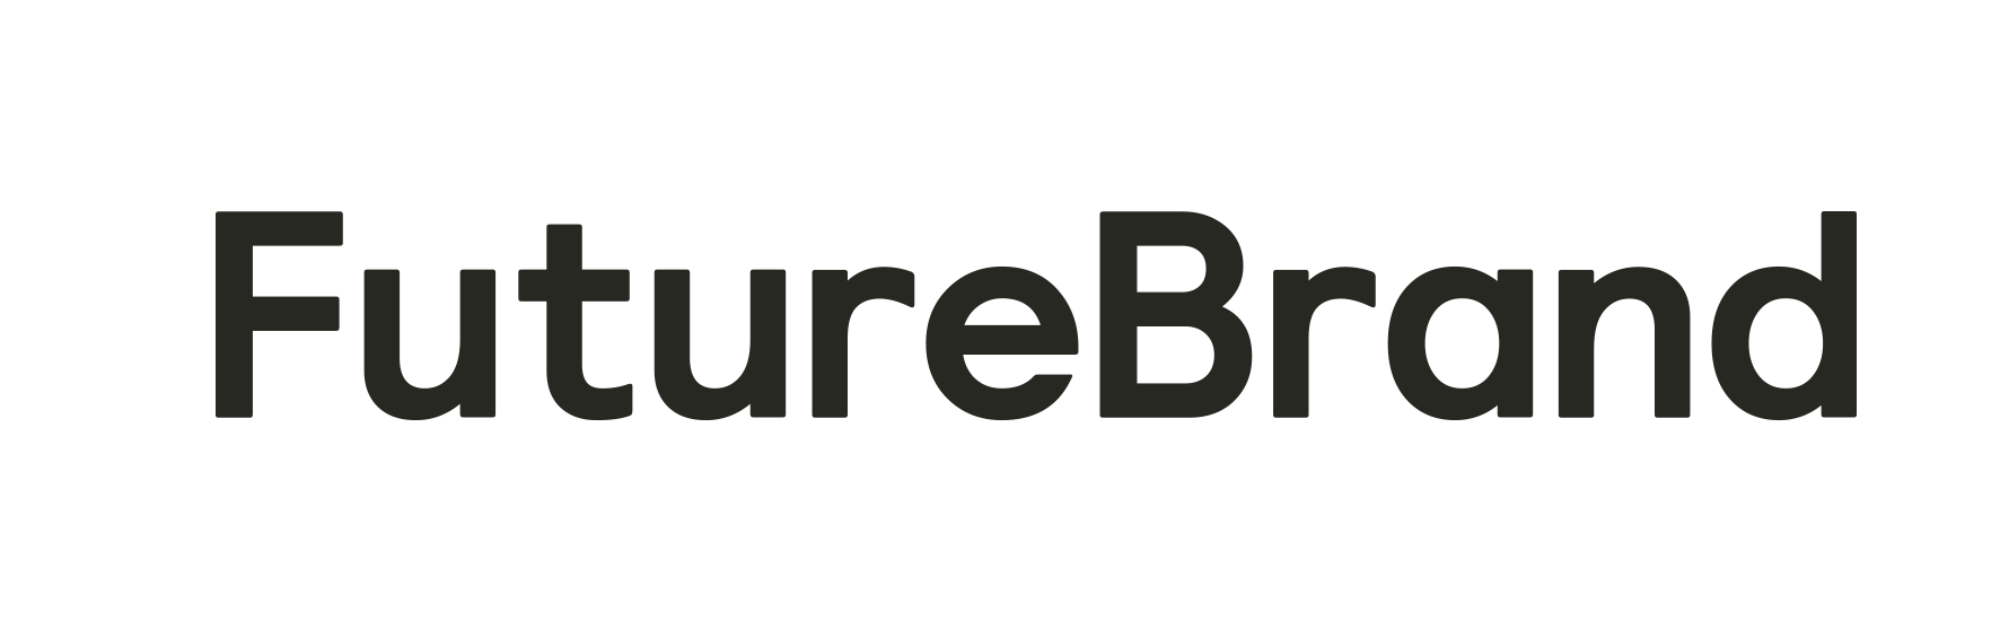 Spanish Shoe Company Brand Logo - FutureBrand: The Creative Future Company | FutureBrand